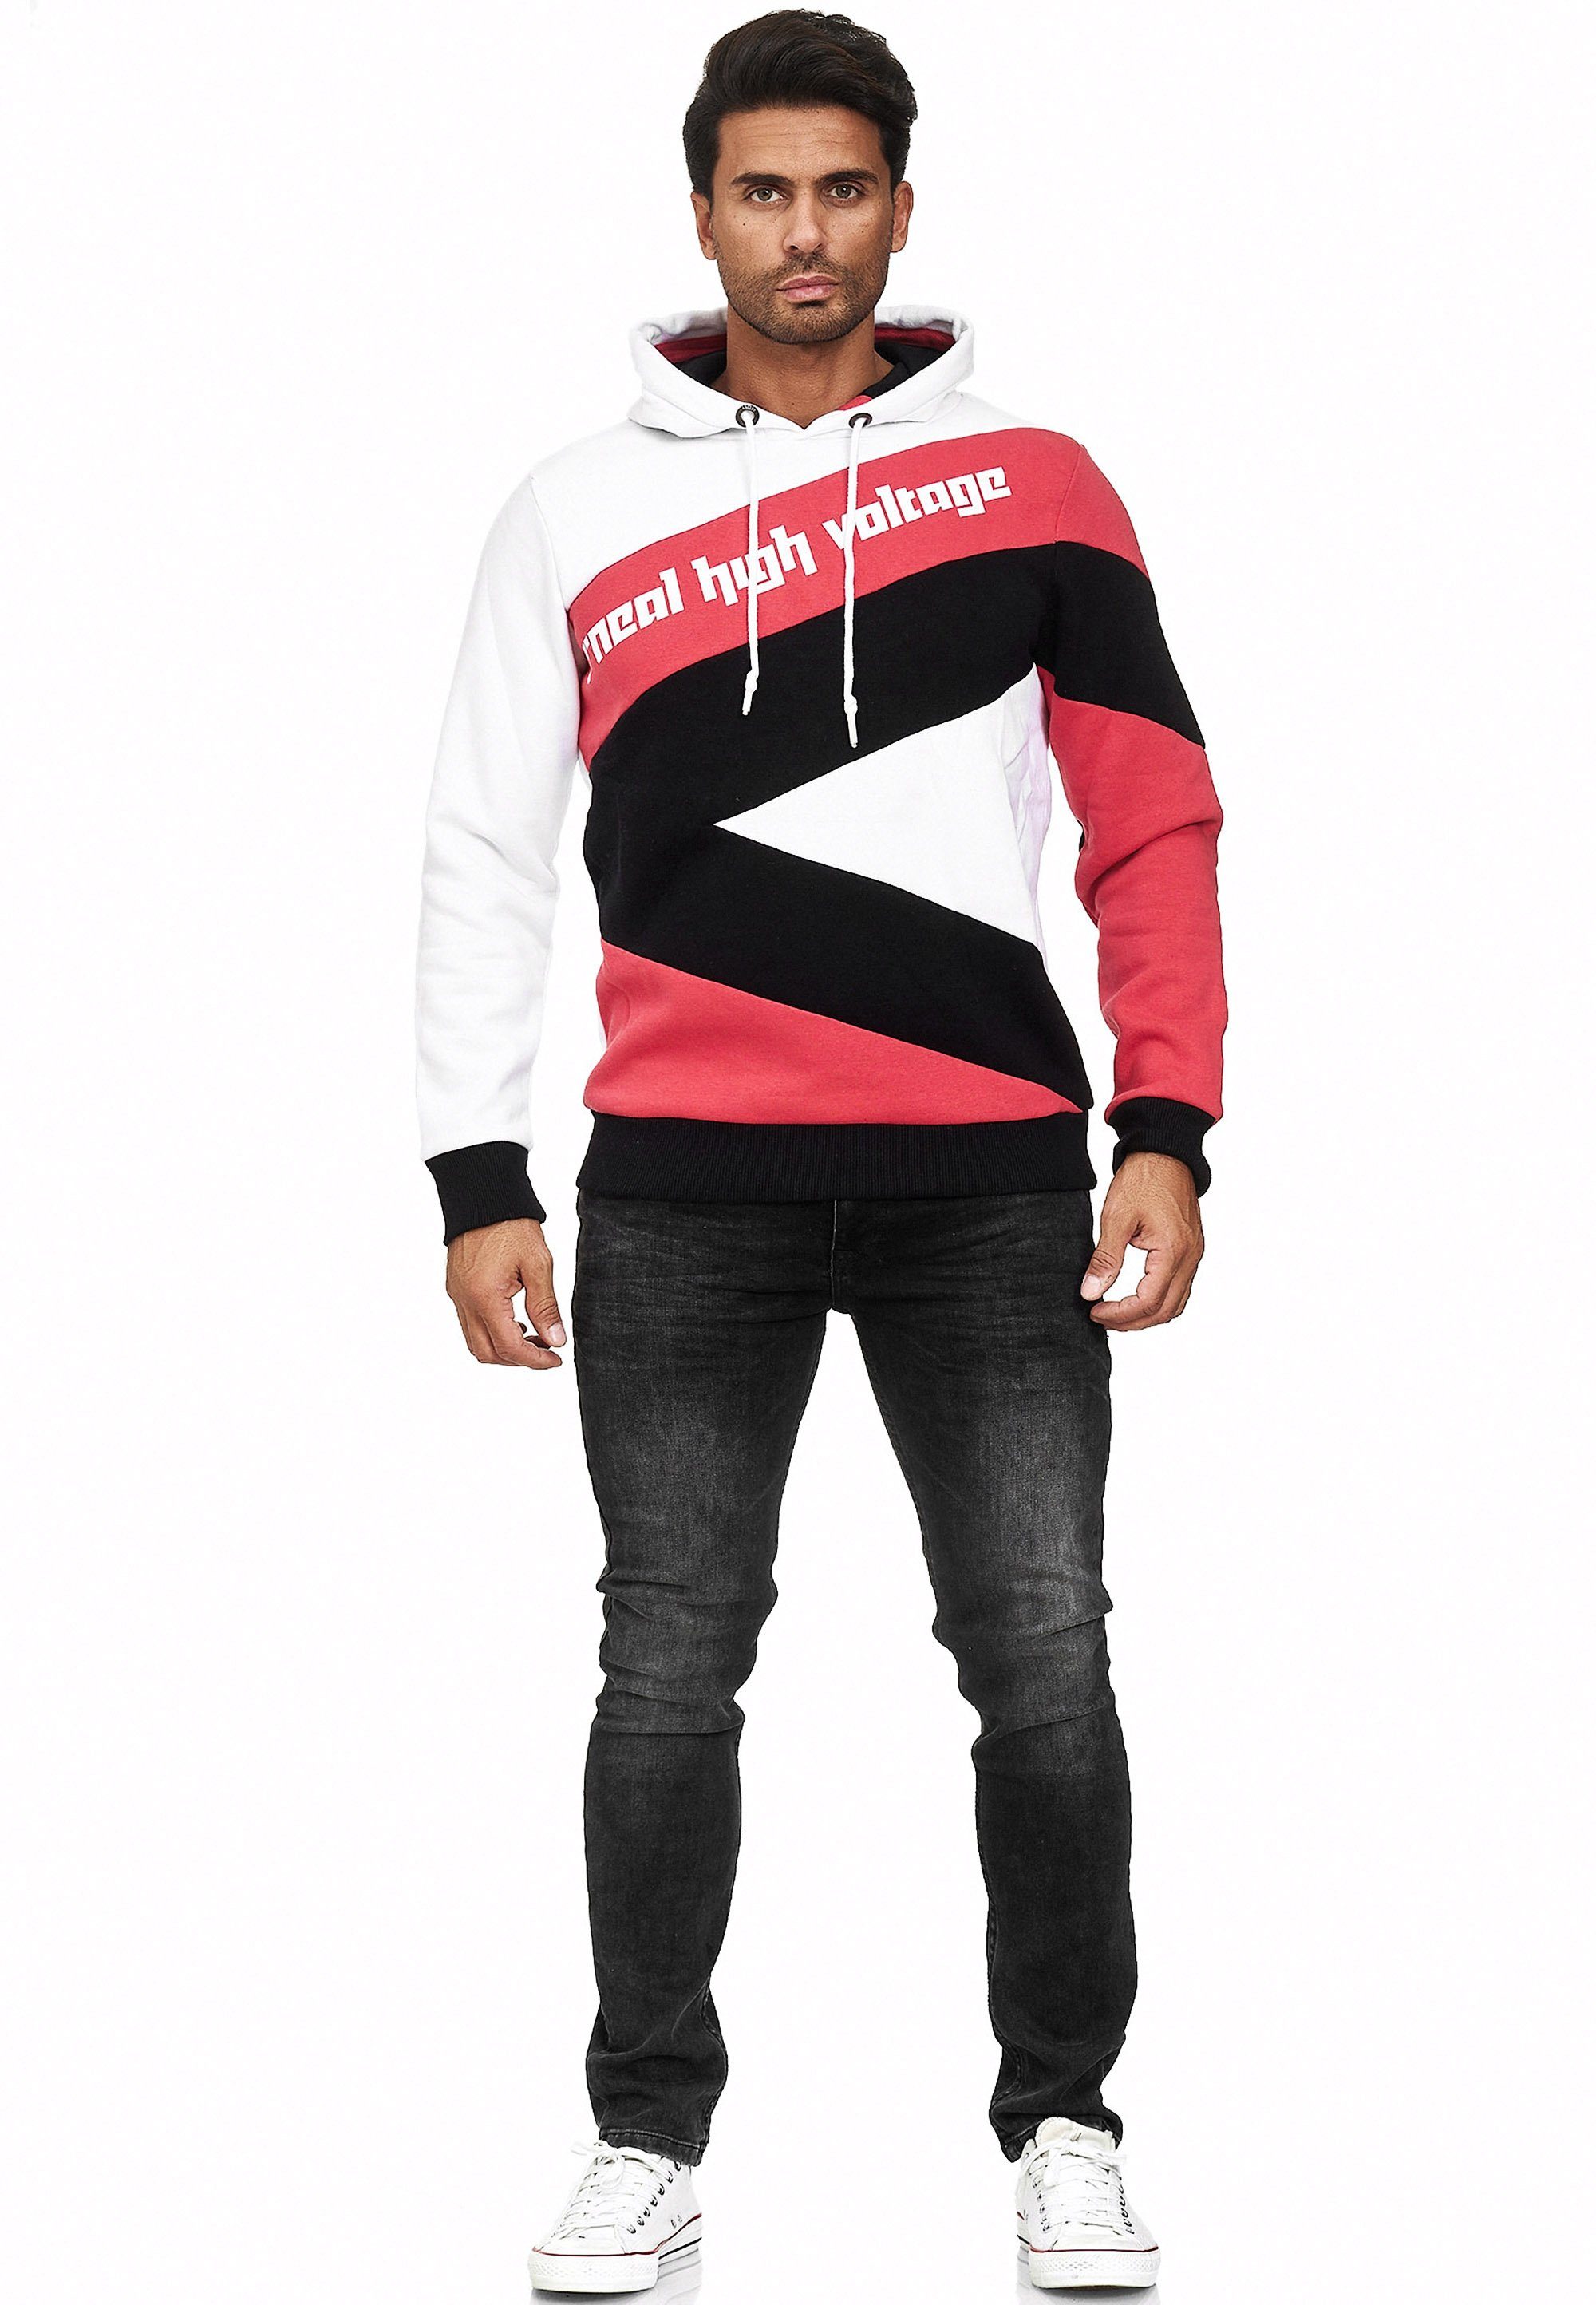 Rusty Neal Kapuzensweatshirt in sportlichem weiß-rot Design